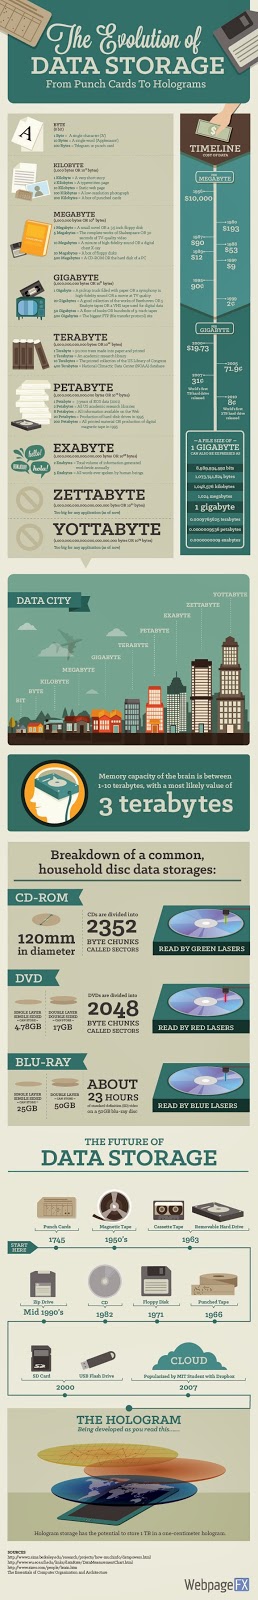 The Evolution of Data Storage